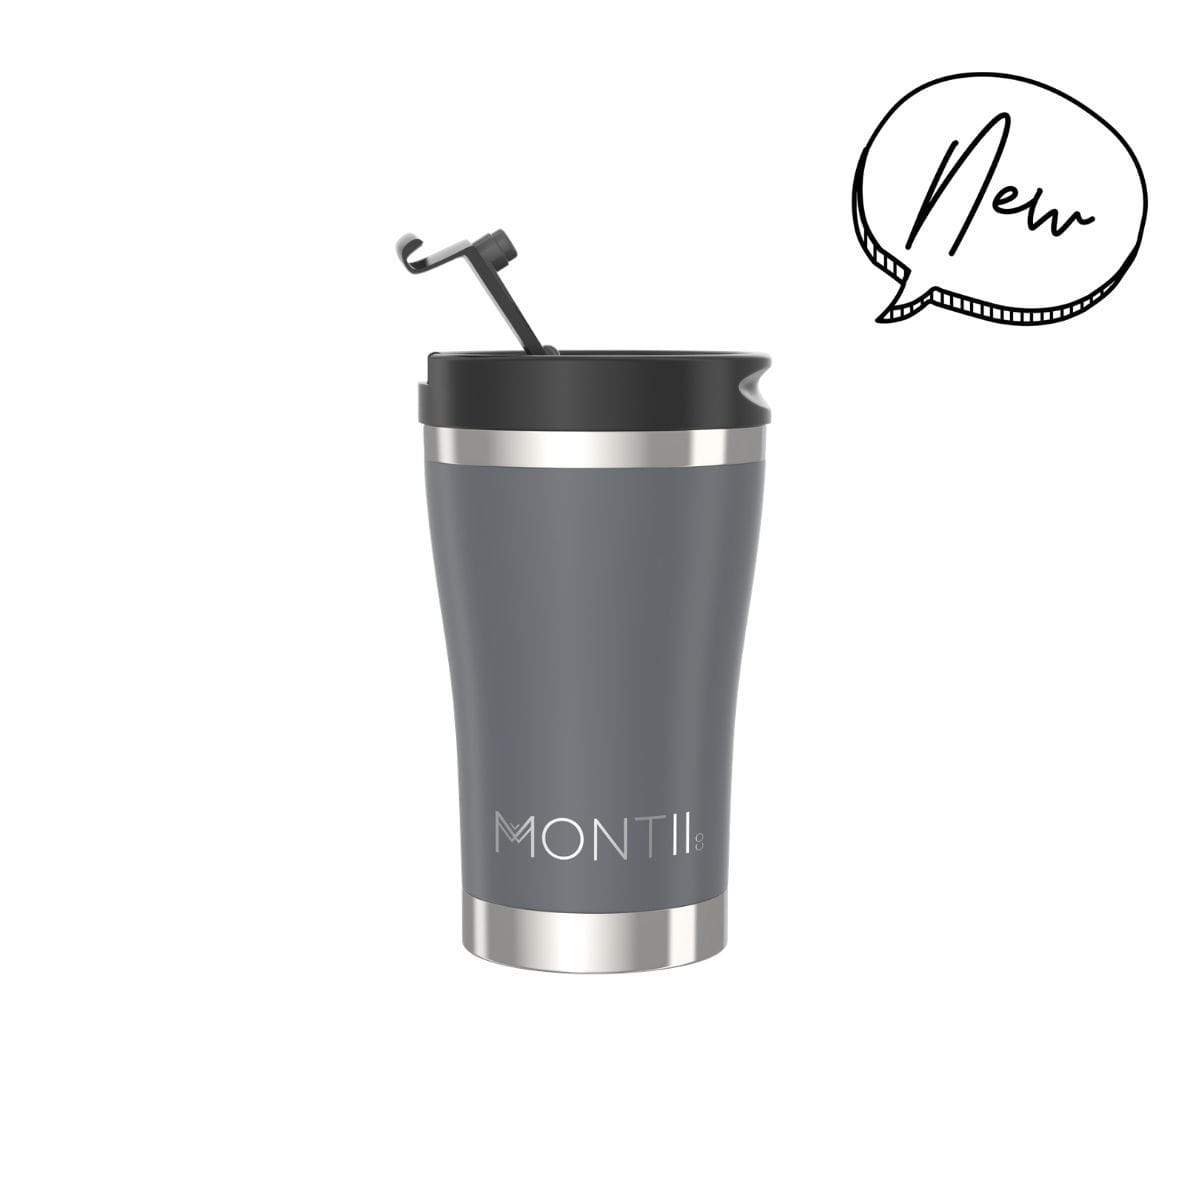 MONTIICO REGULAR COFFEE CUP - GREY